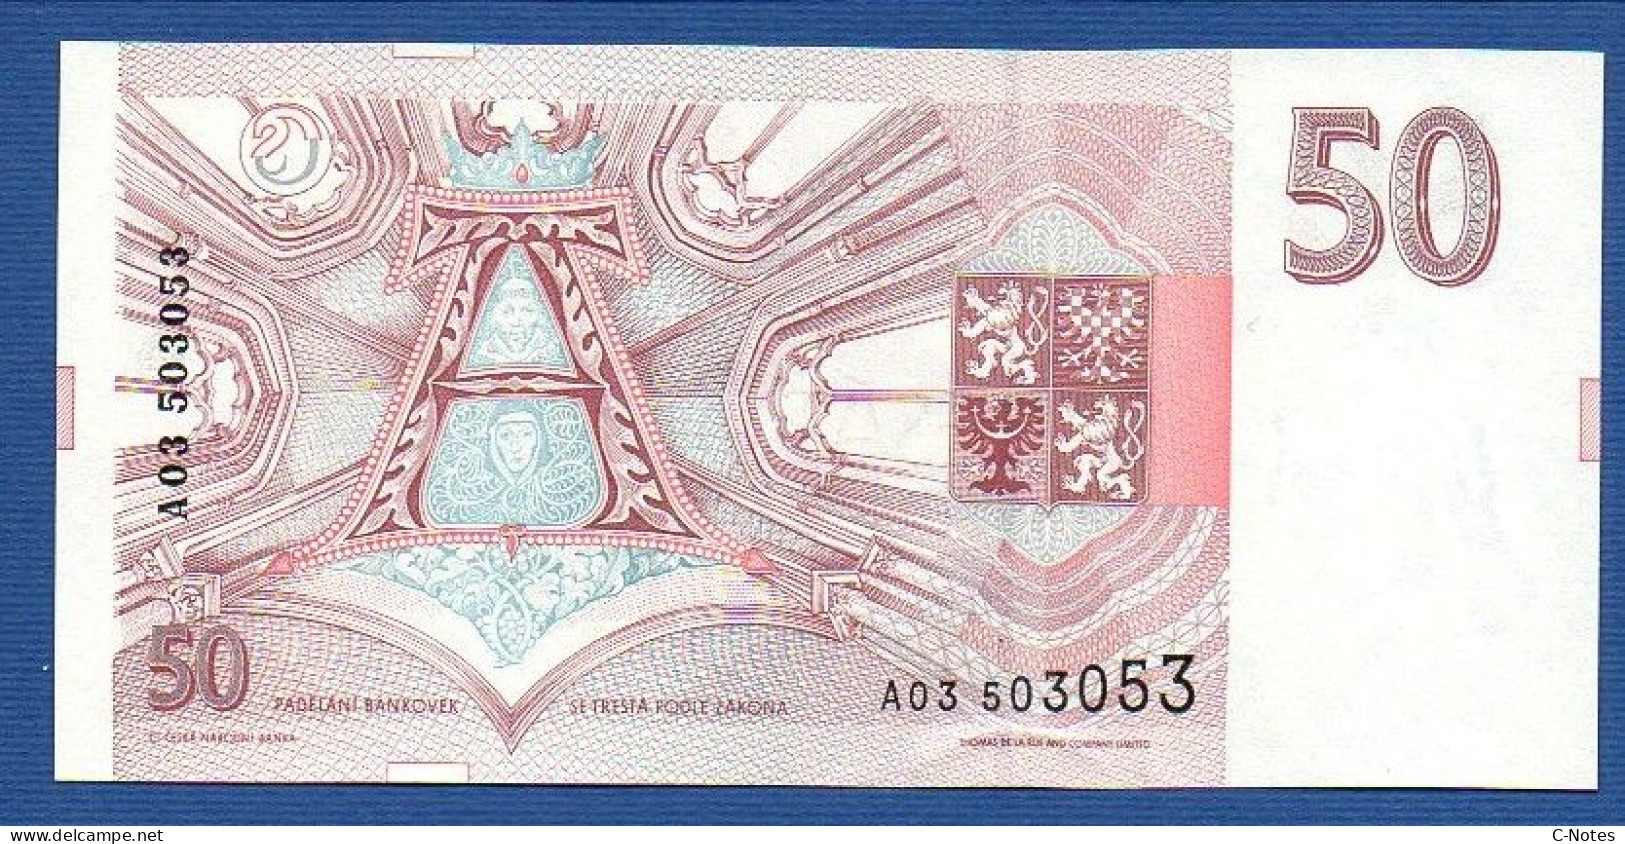 CZECHIA - CZECH Republic - P. 4 – 50 Korun 1993  UNC, S/n A03 503053 - Tchéquie